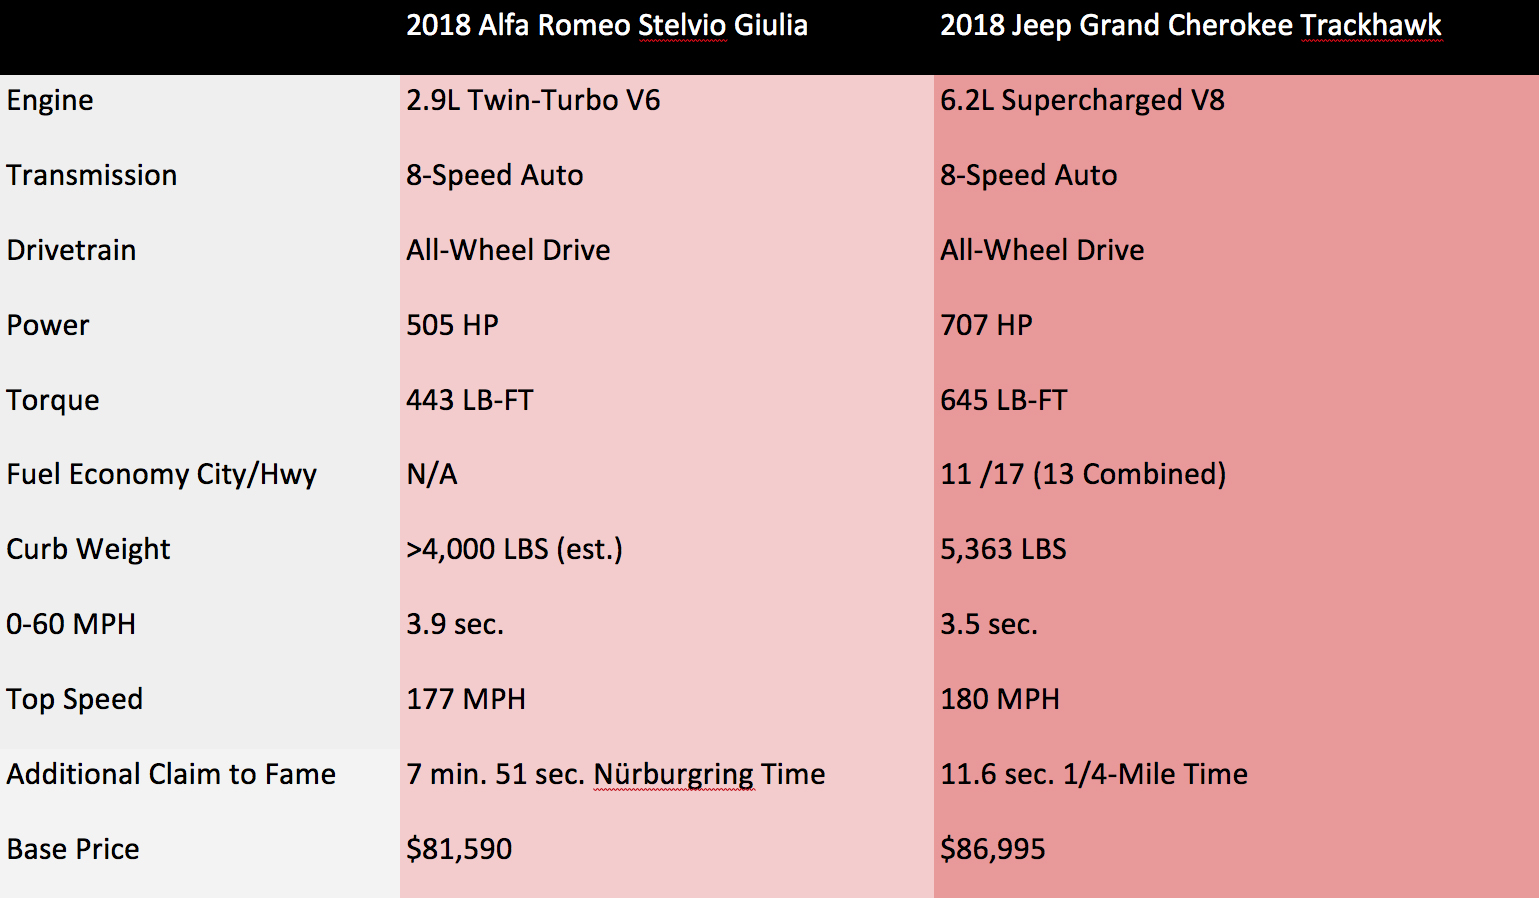 2018 Jeep Grand Cherokee Comparison Chart